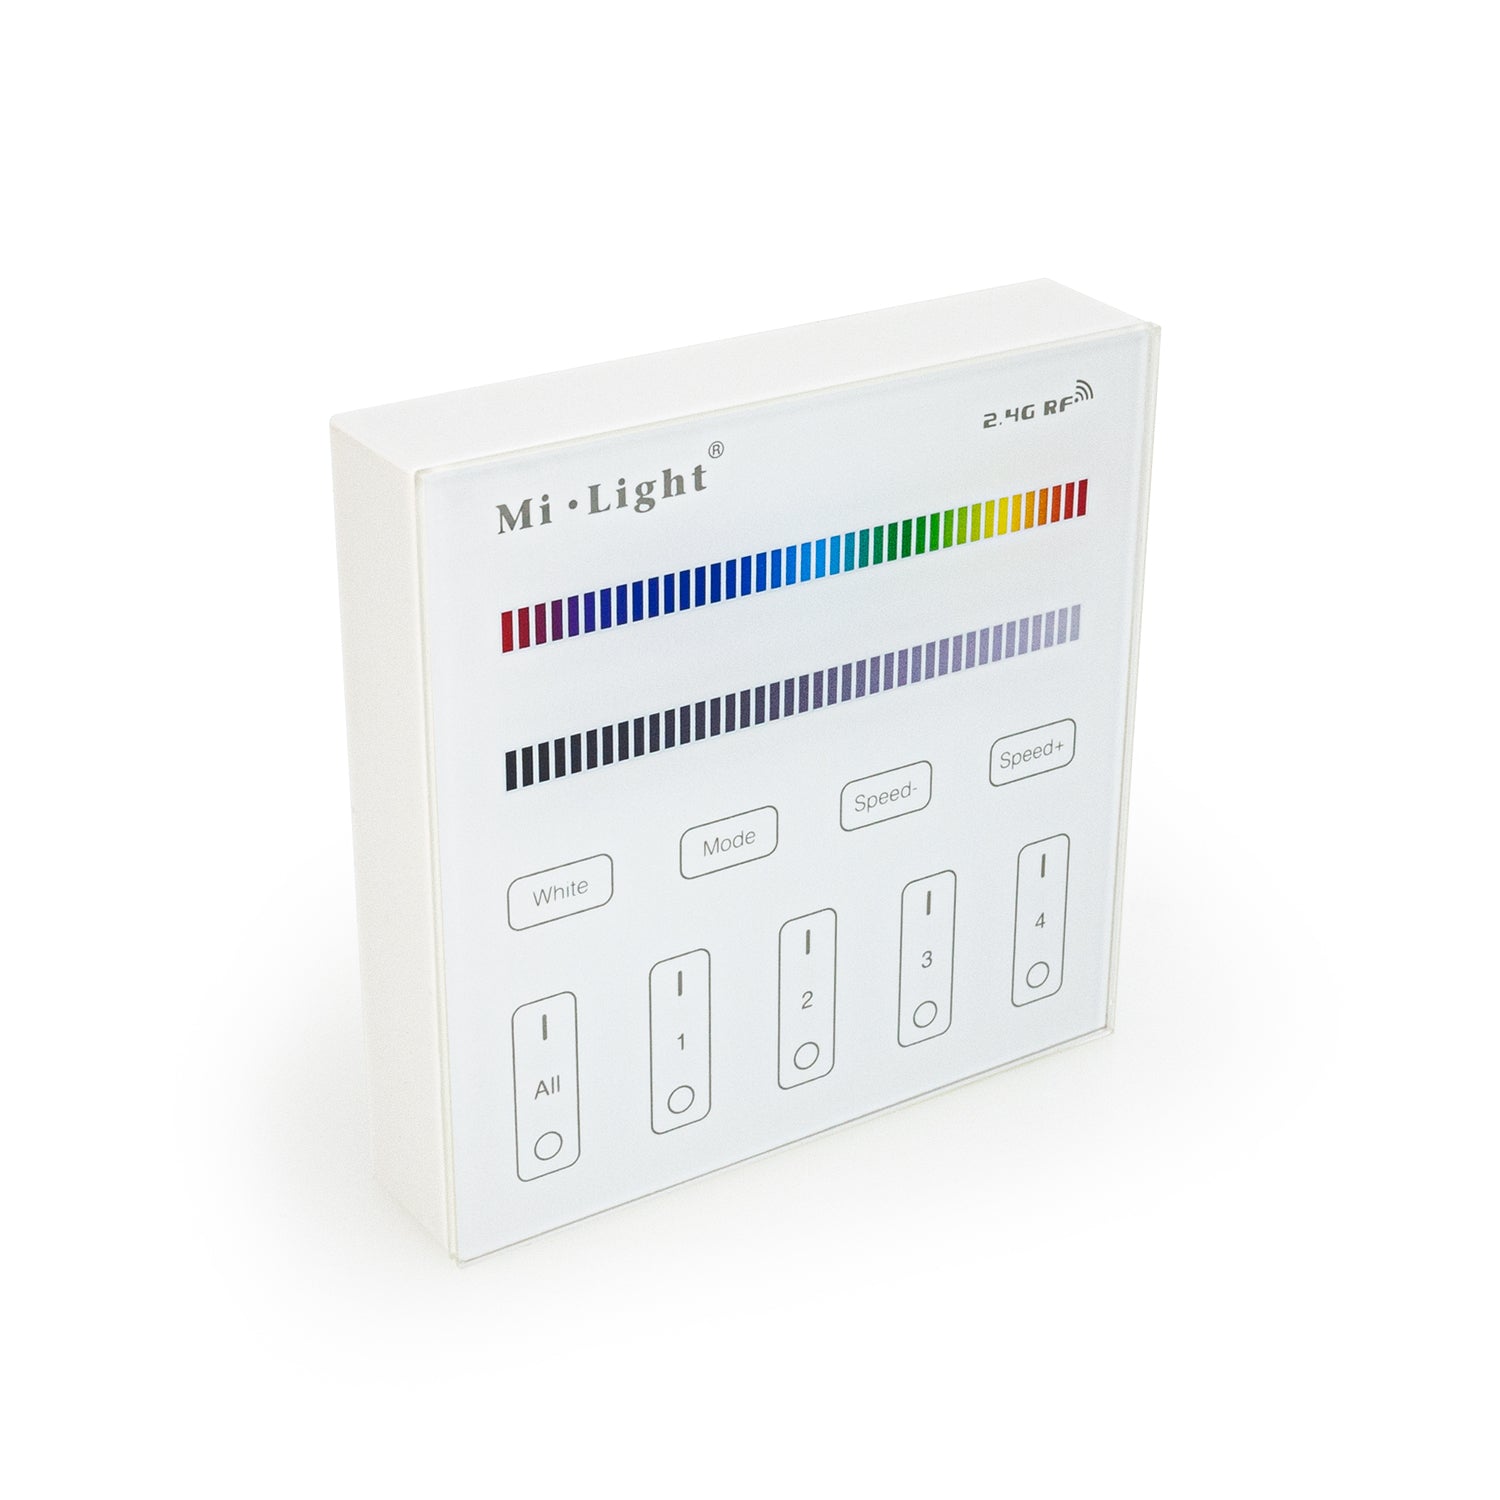 VBD-MI-4Z-B3 Smart Touch Panel Remote Controller RGB – RGBW, Veroboard